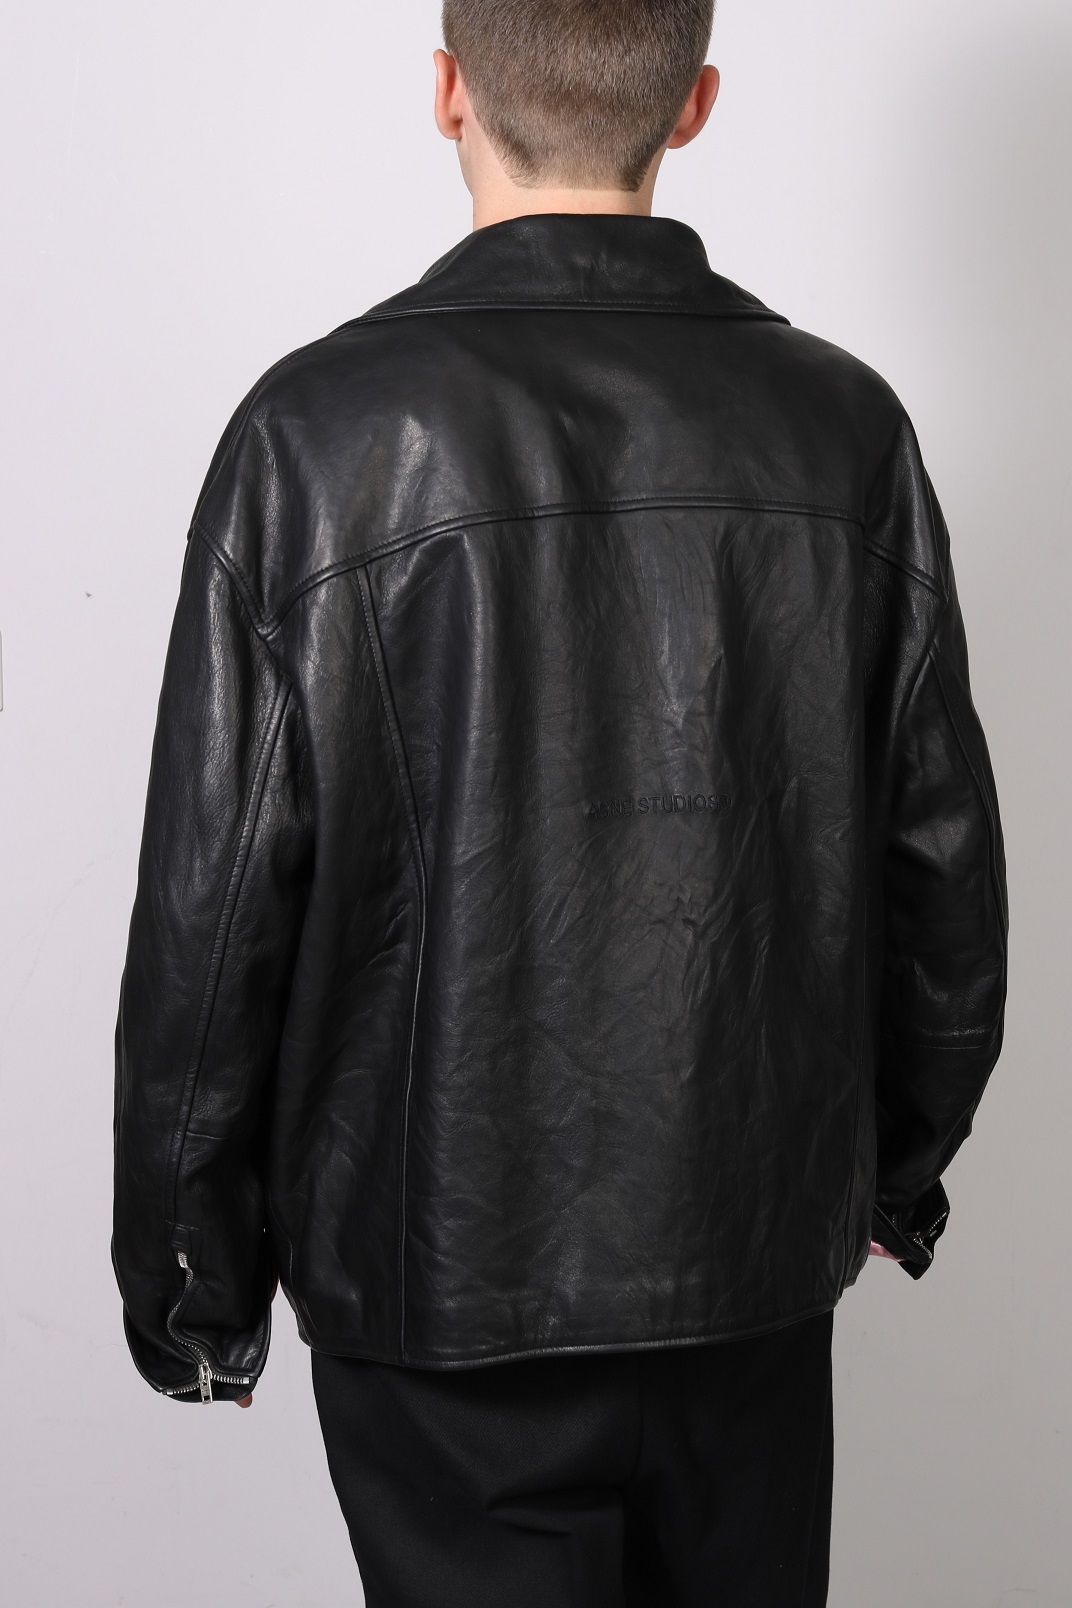 ACNE STUDIOS Vintage Leather Jacket in Black 46